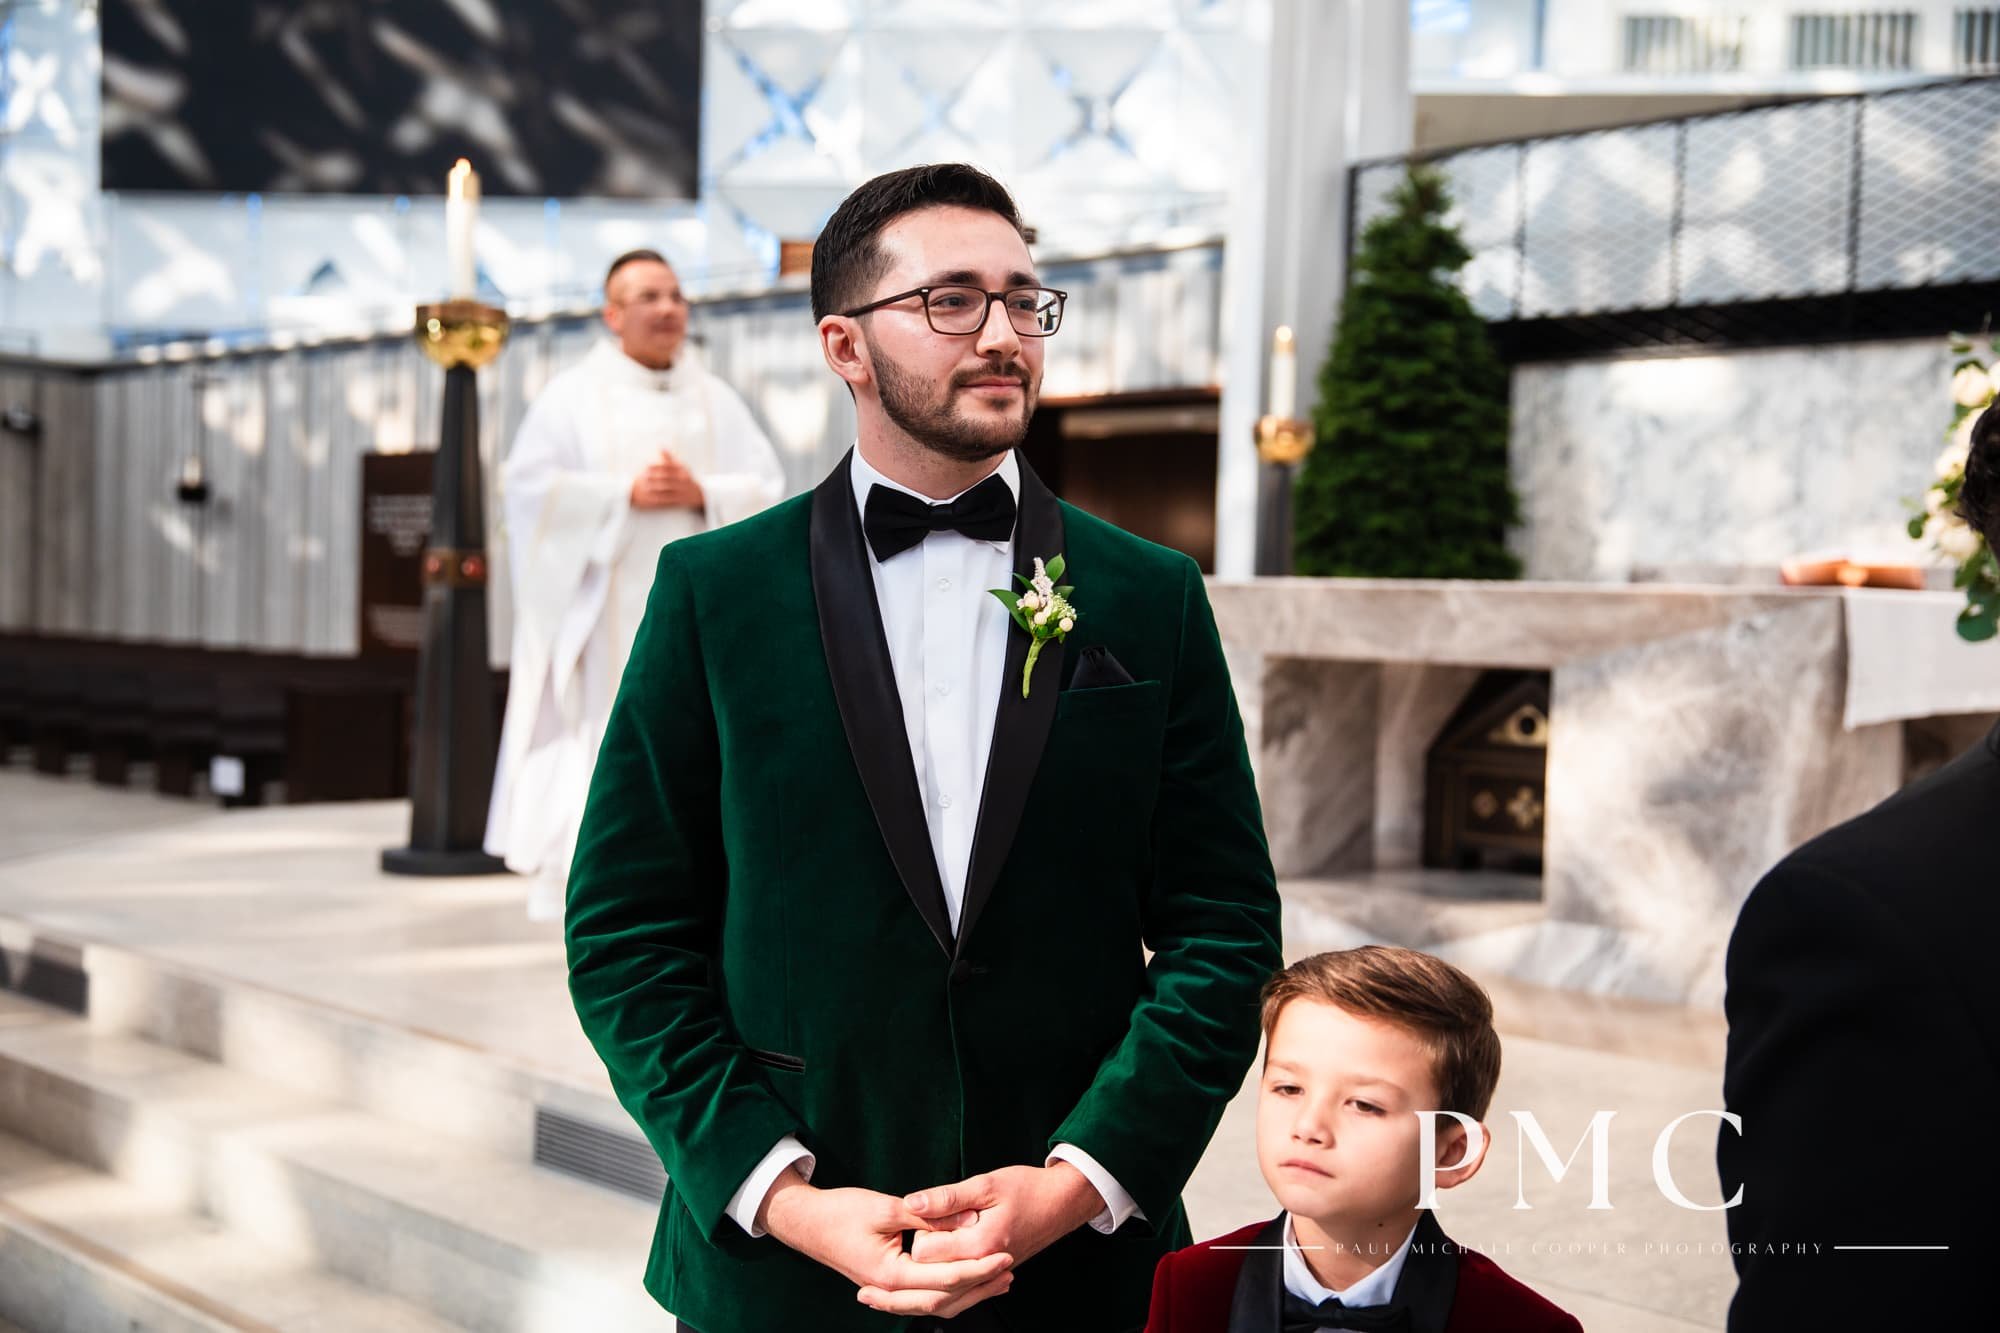 Christ Cathedral and Marriott Irvine Spectrum Wedding - Best Orange County Wedding Photographer-40.jpg